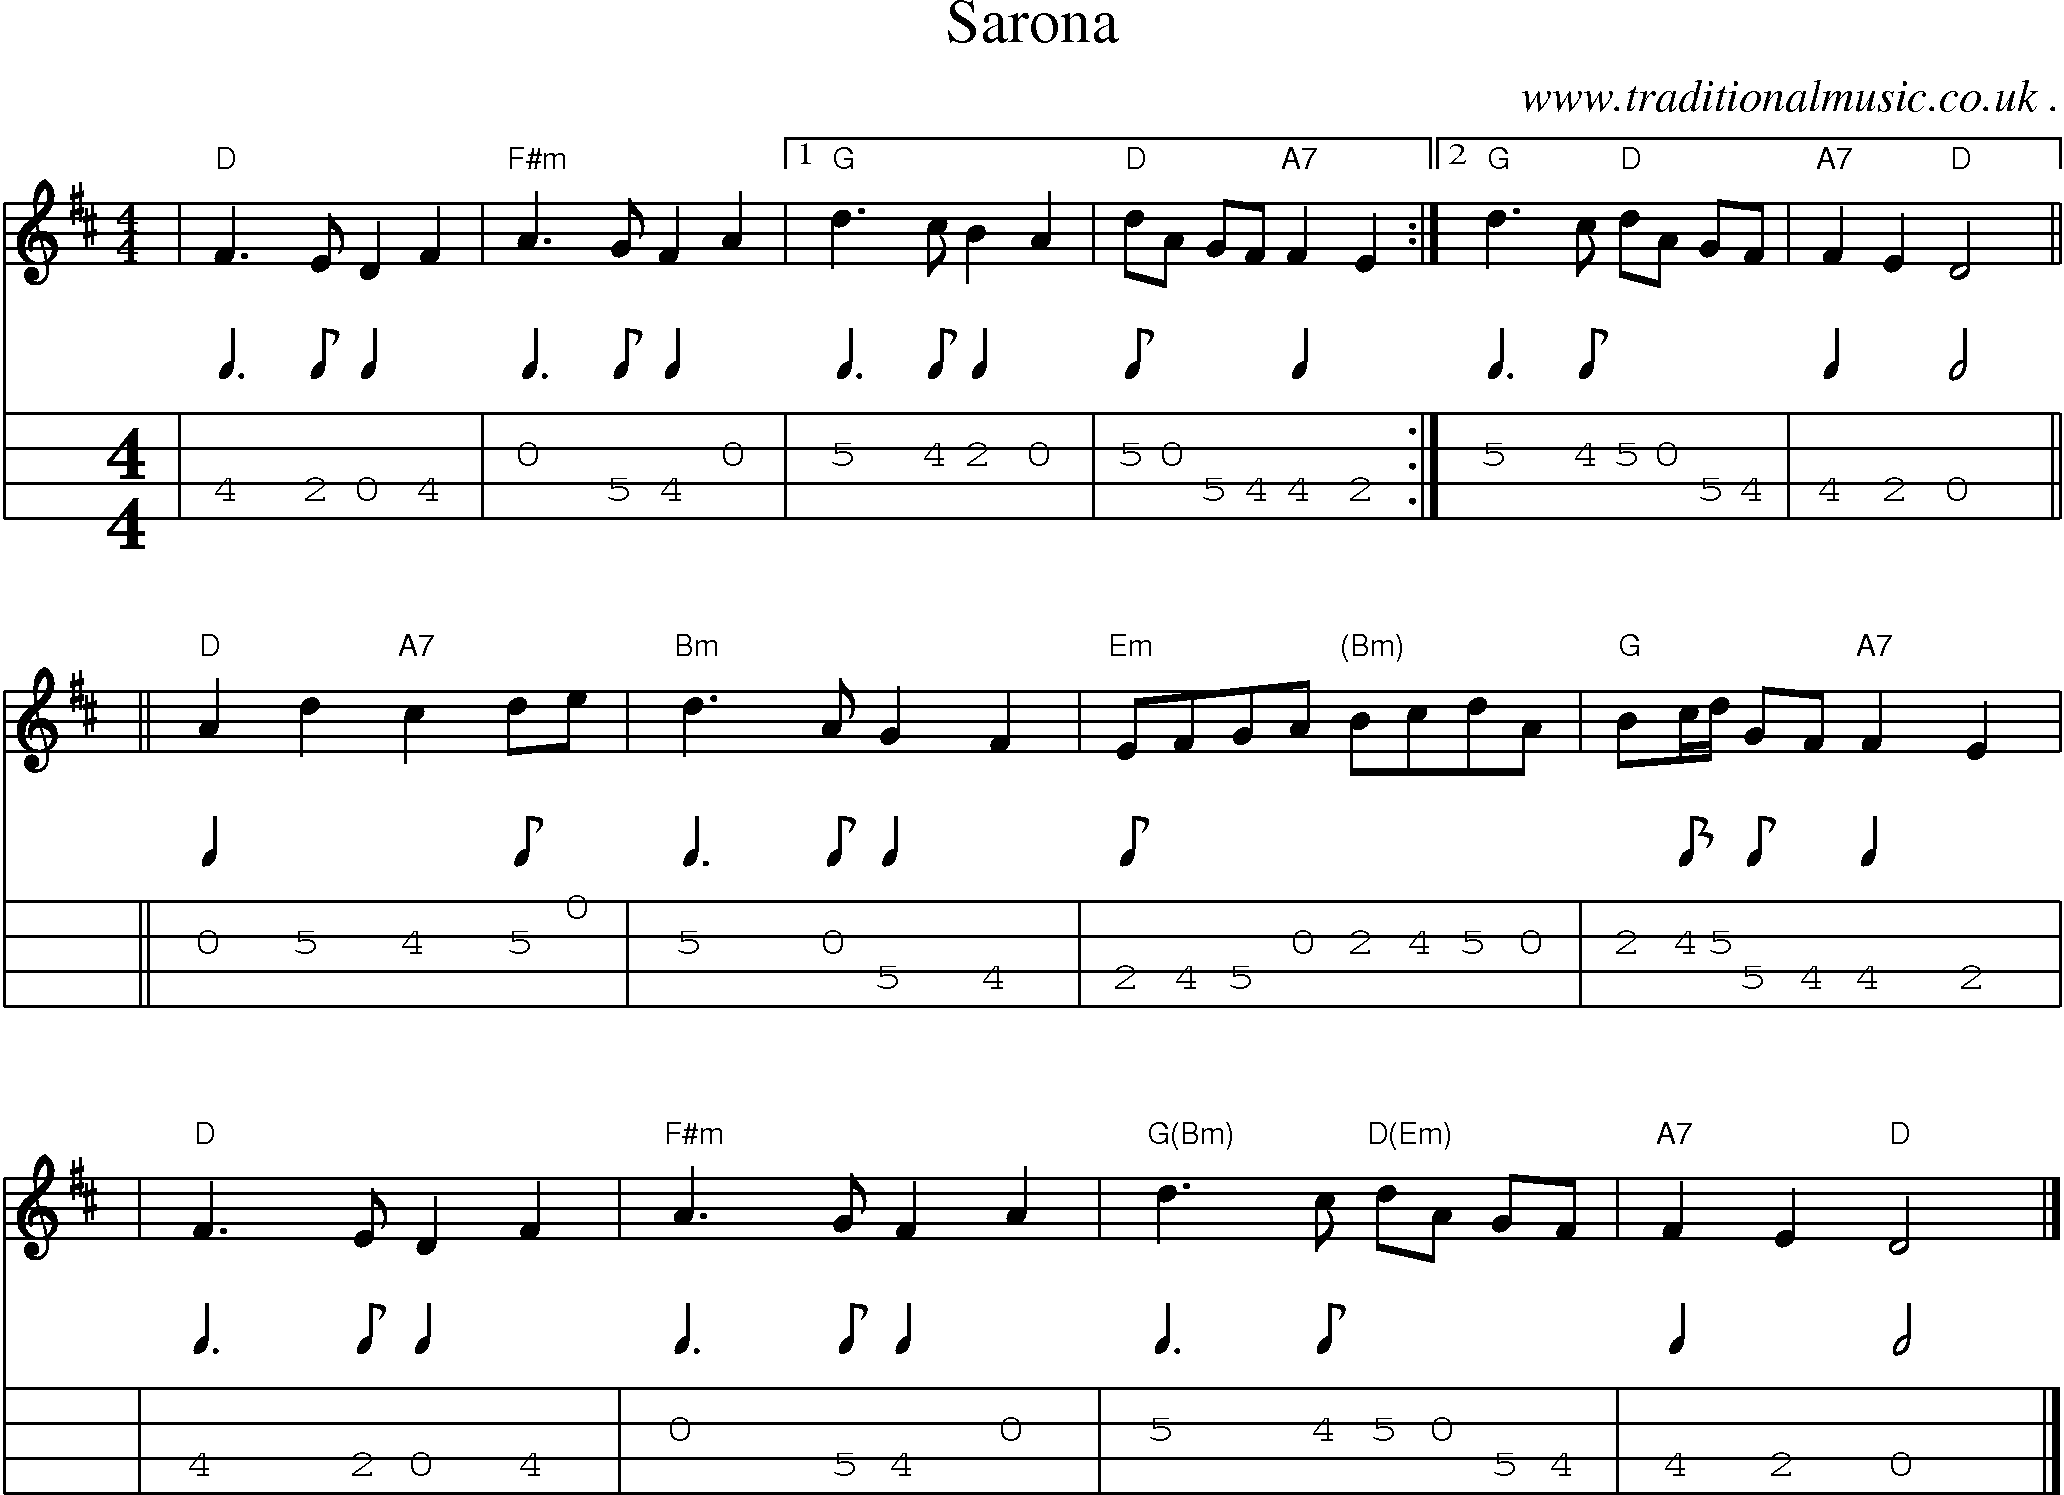 Sheet-music  score, Chords and Mandolin Tabs for Sarona